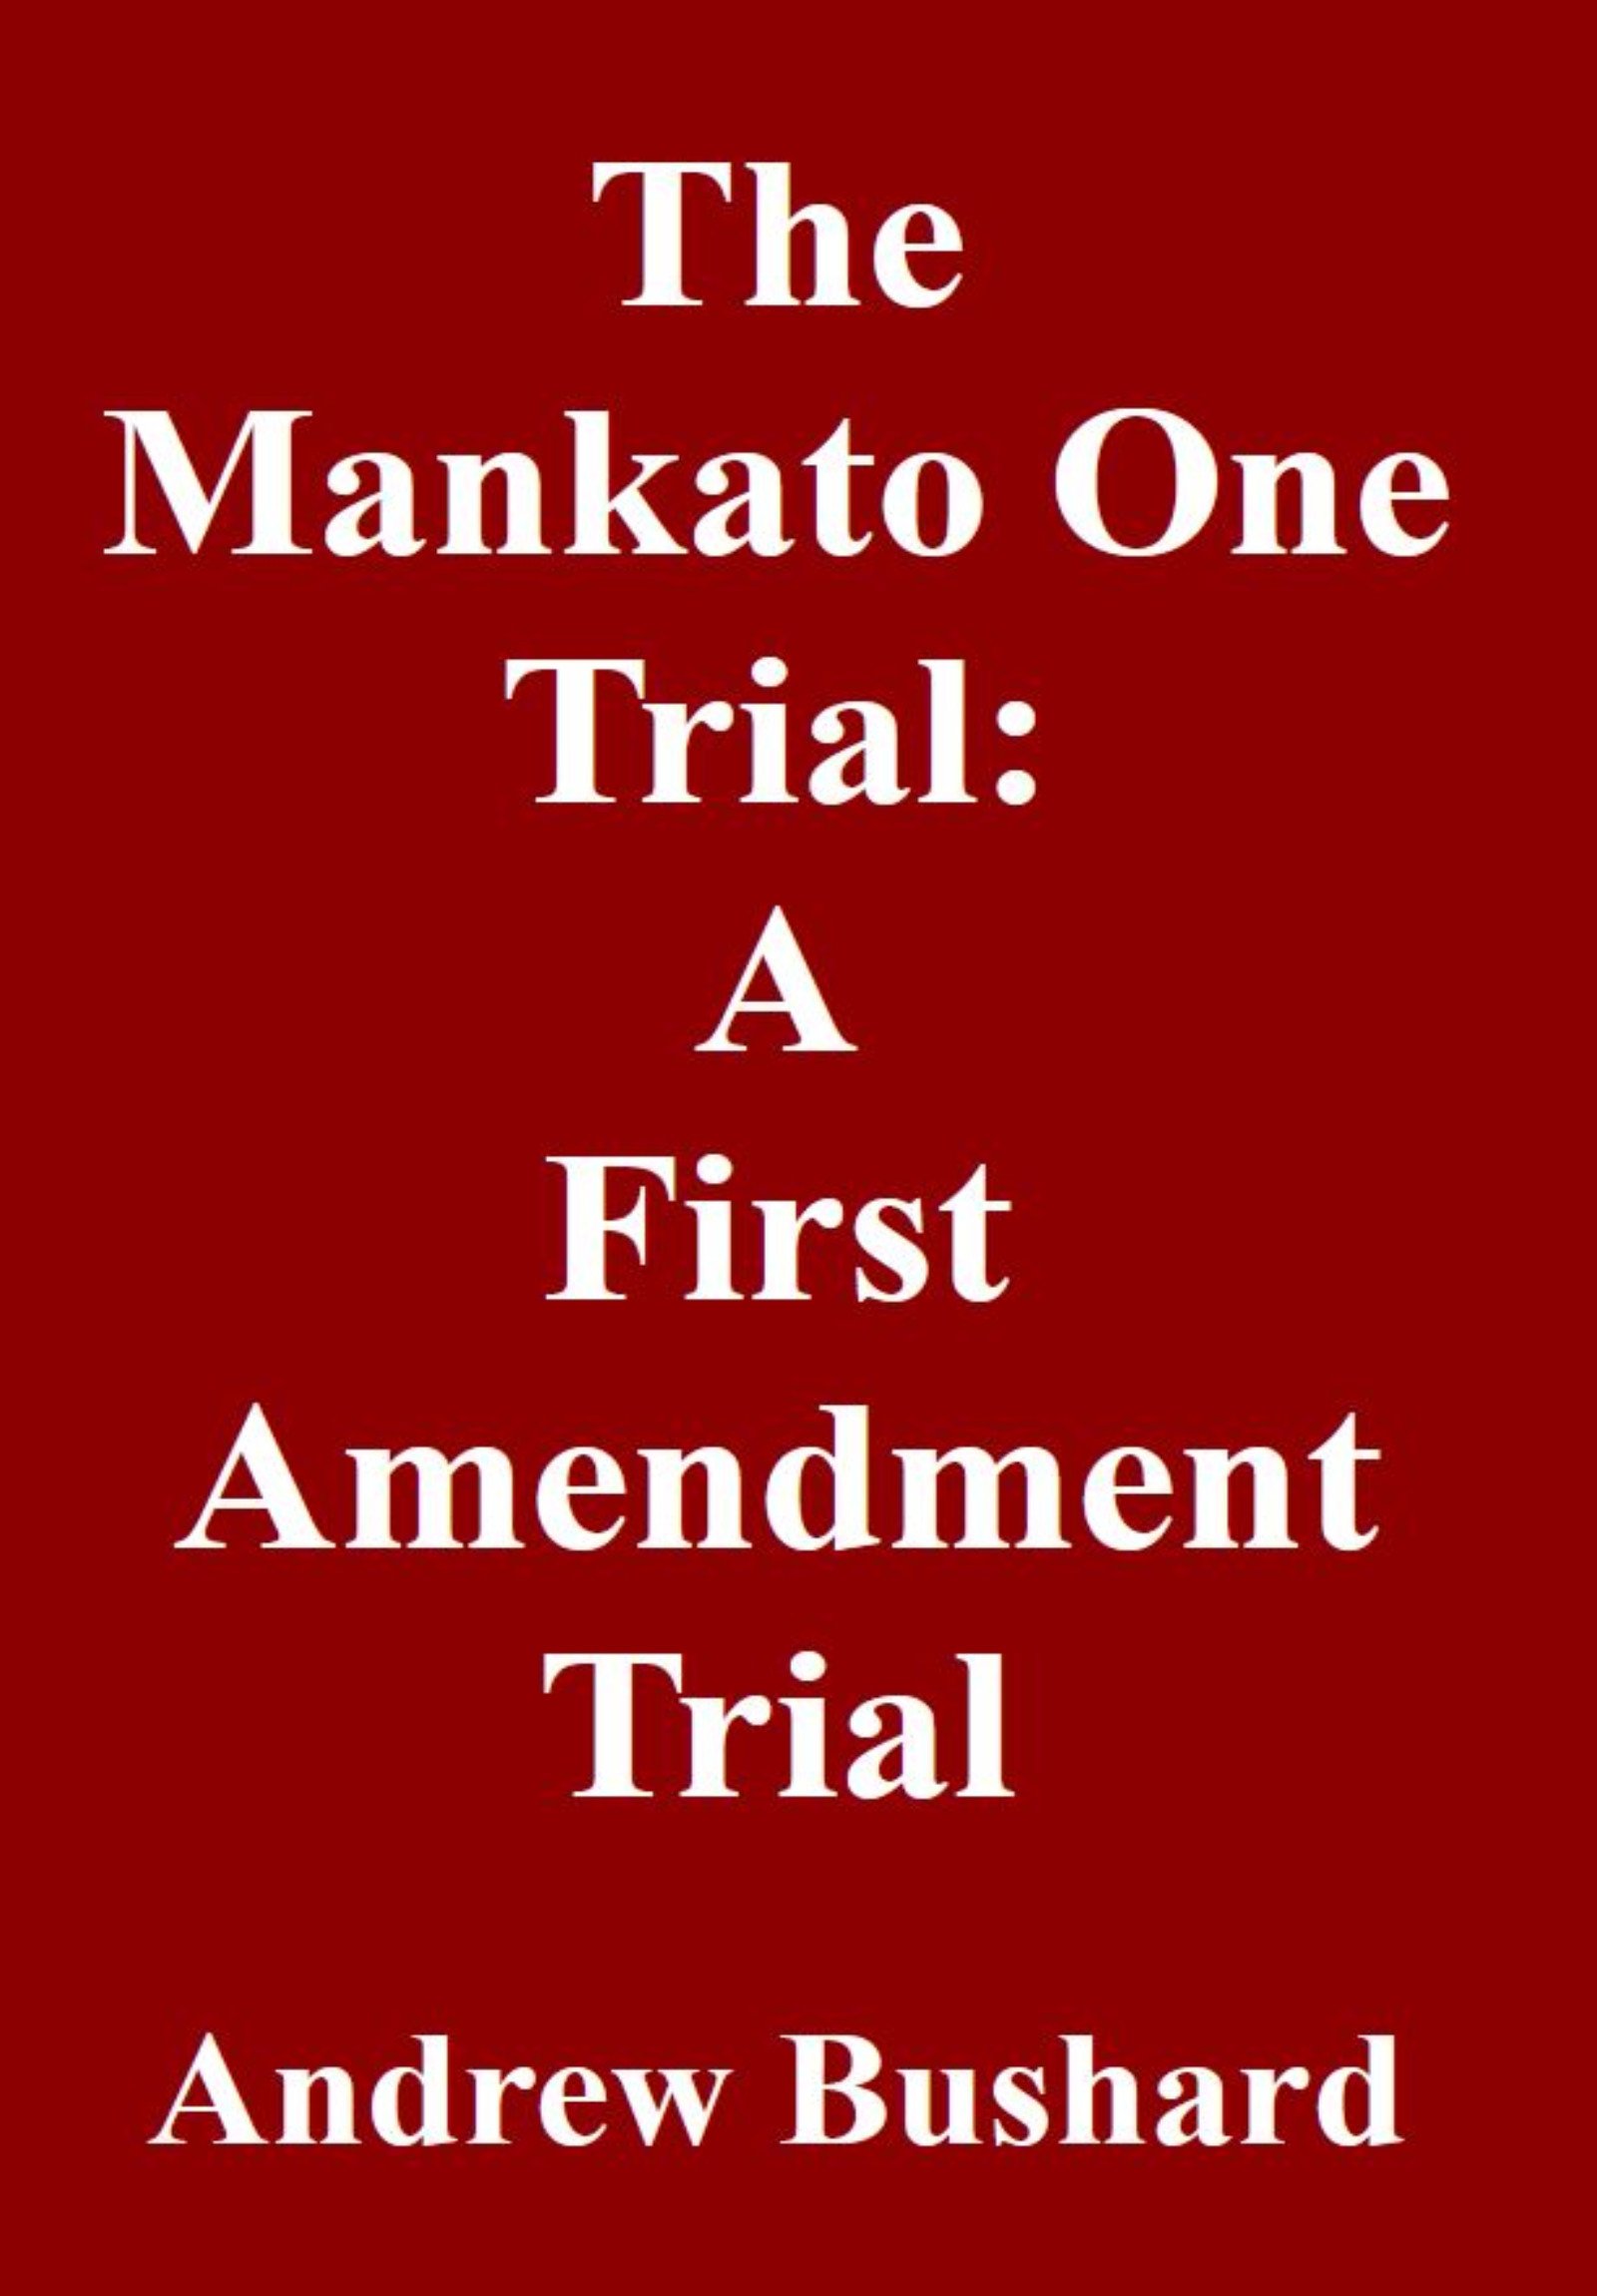 The Mankato One Trial: A First Amendment Trial